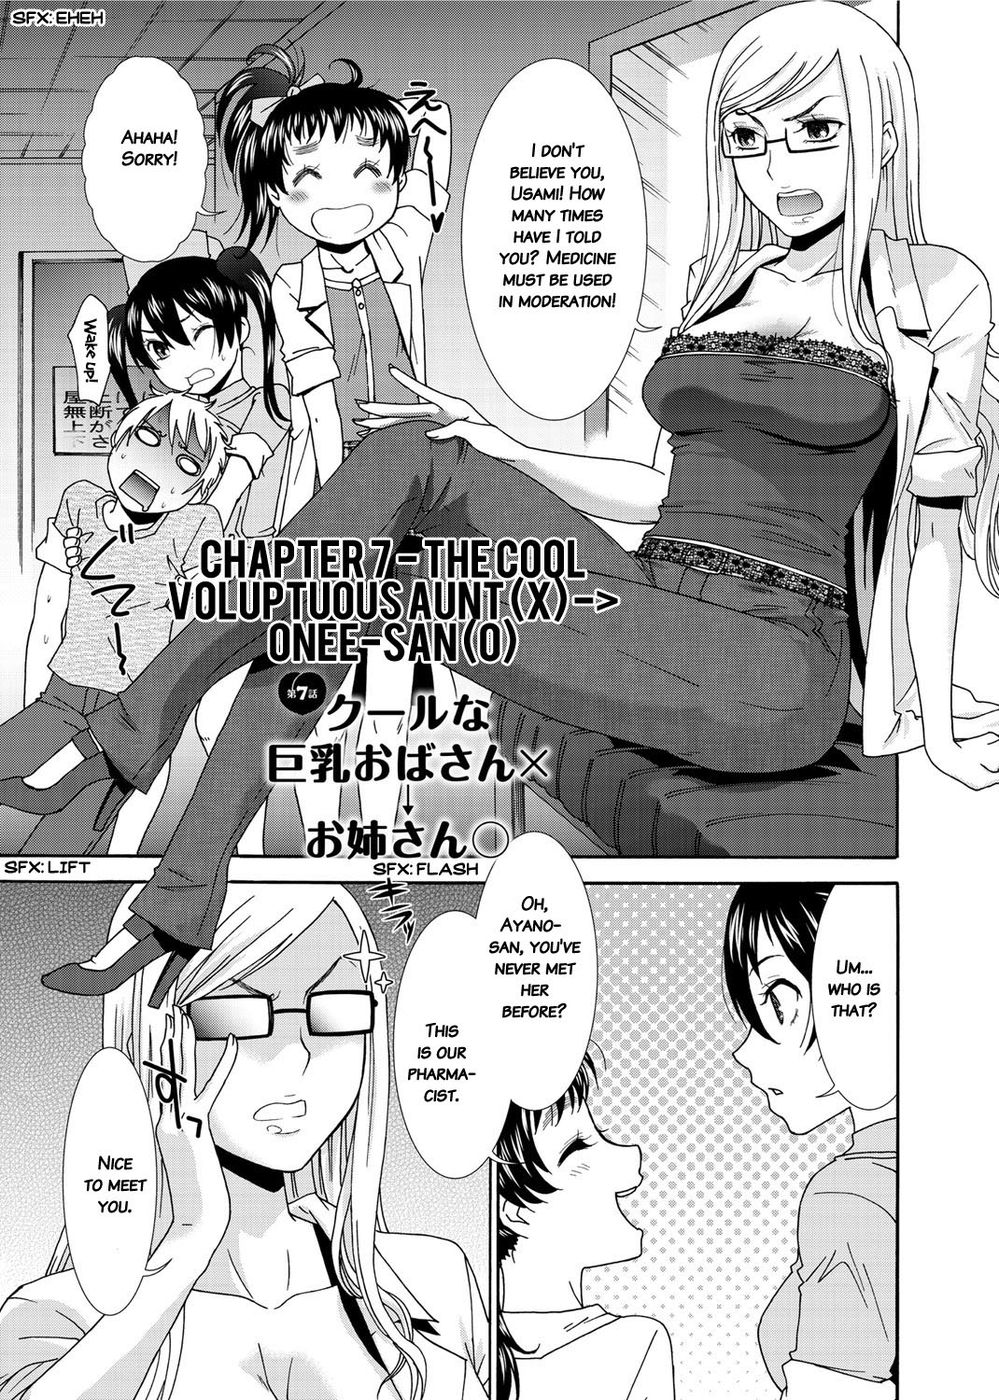 Hentai Manga Comic-Momoiro Nurse-Chapter 7 - The cool voluptuous aunt (x)-1